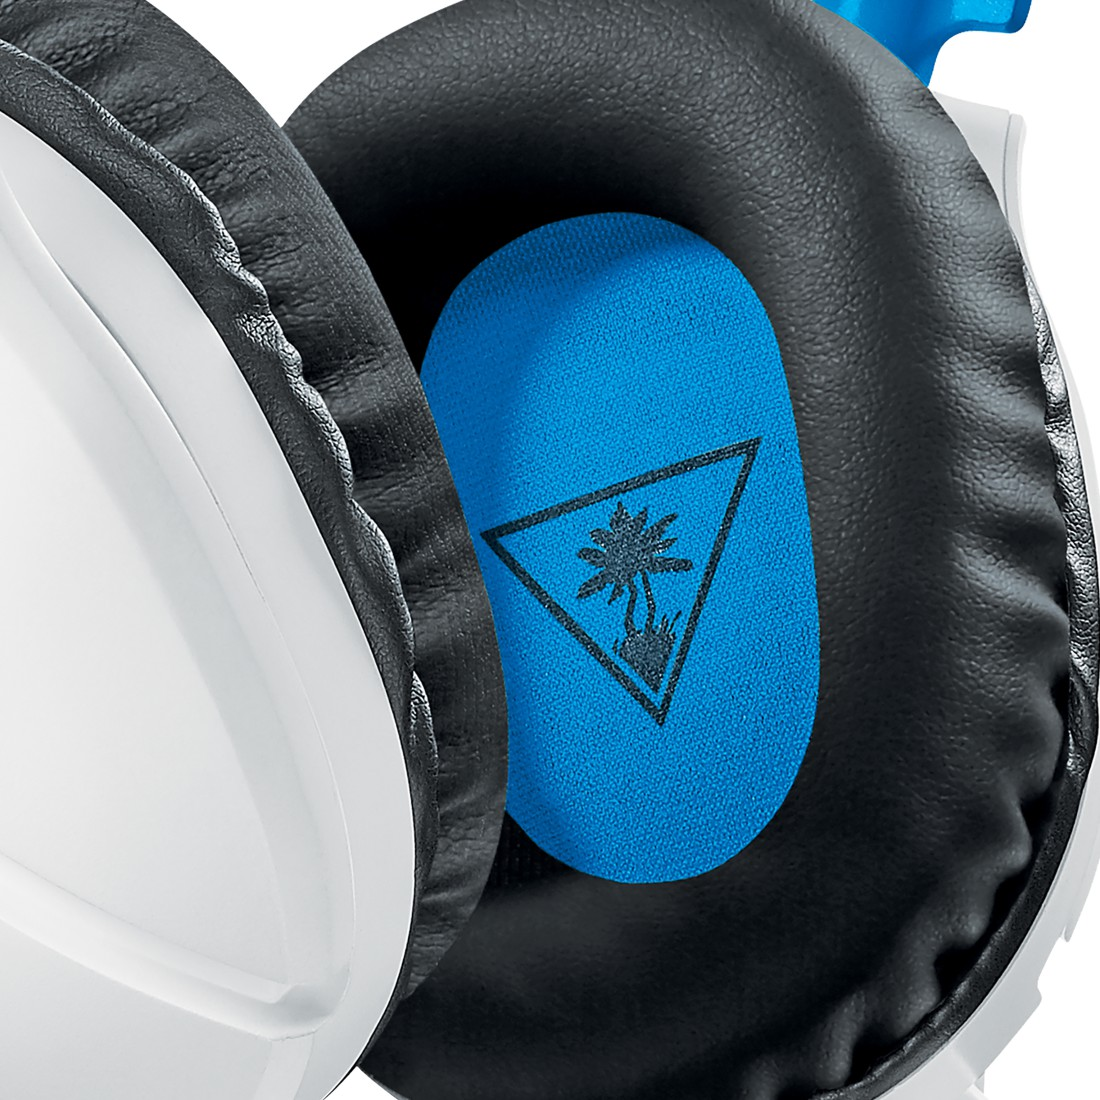 Headset TURTLE Over-ear BEACH Weiß/Blau 70, Gaming Recon